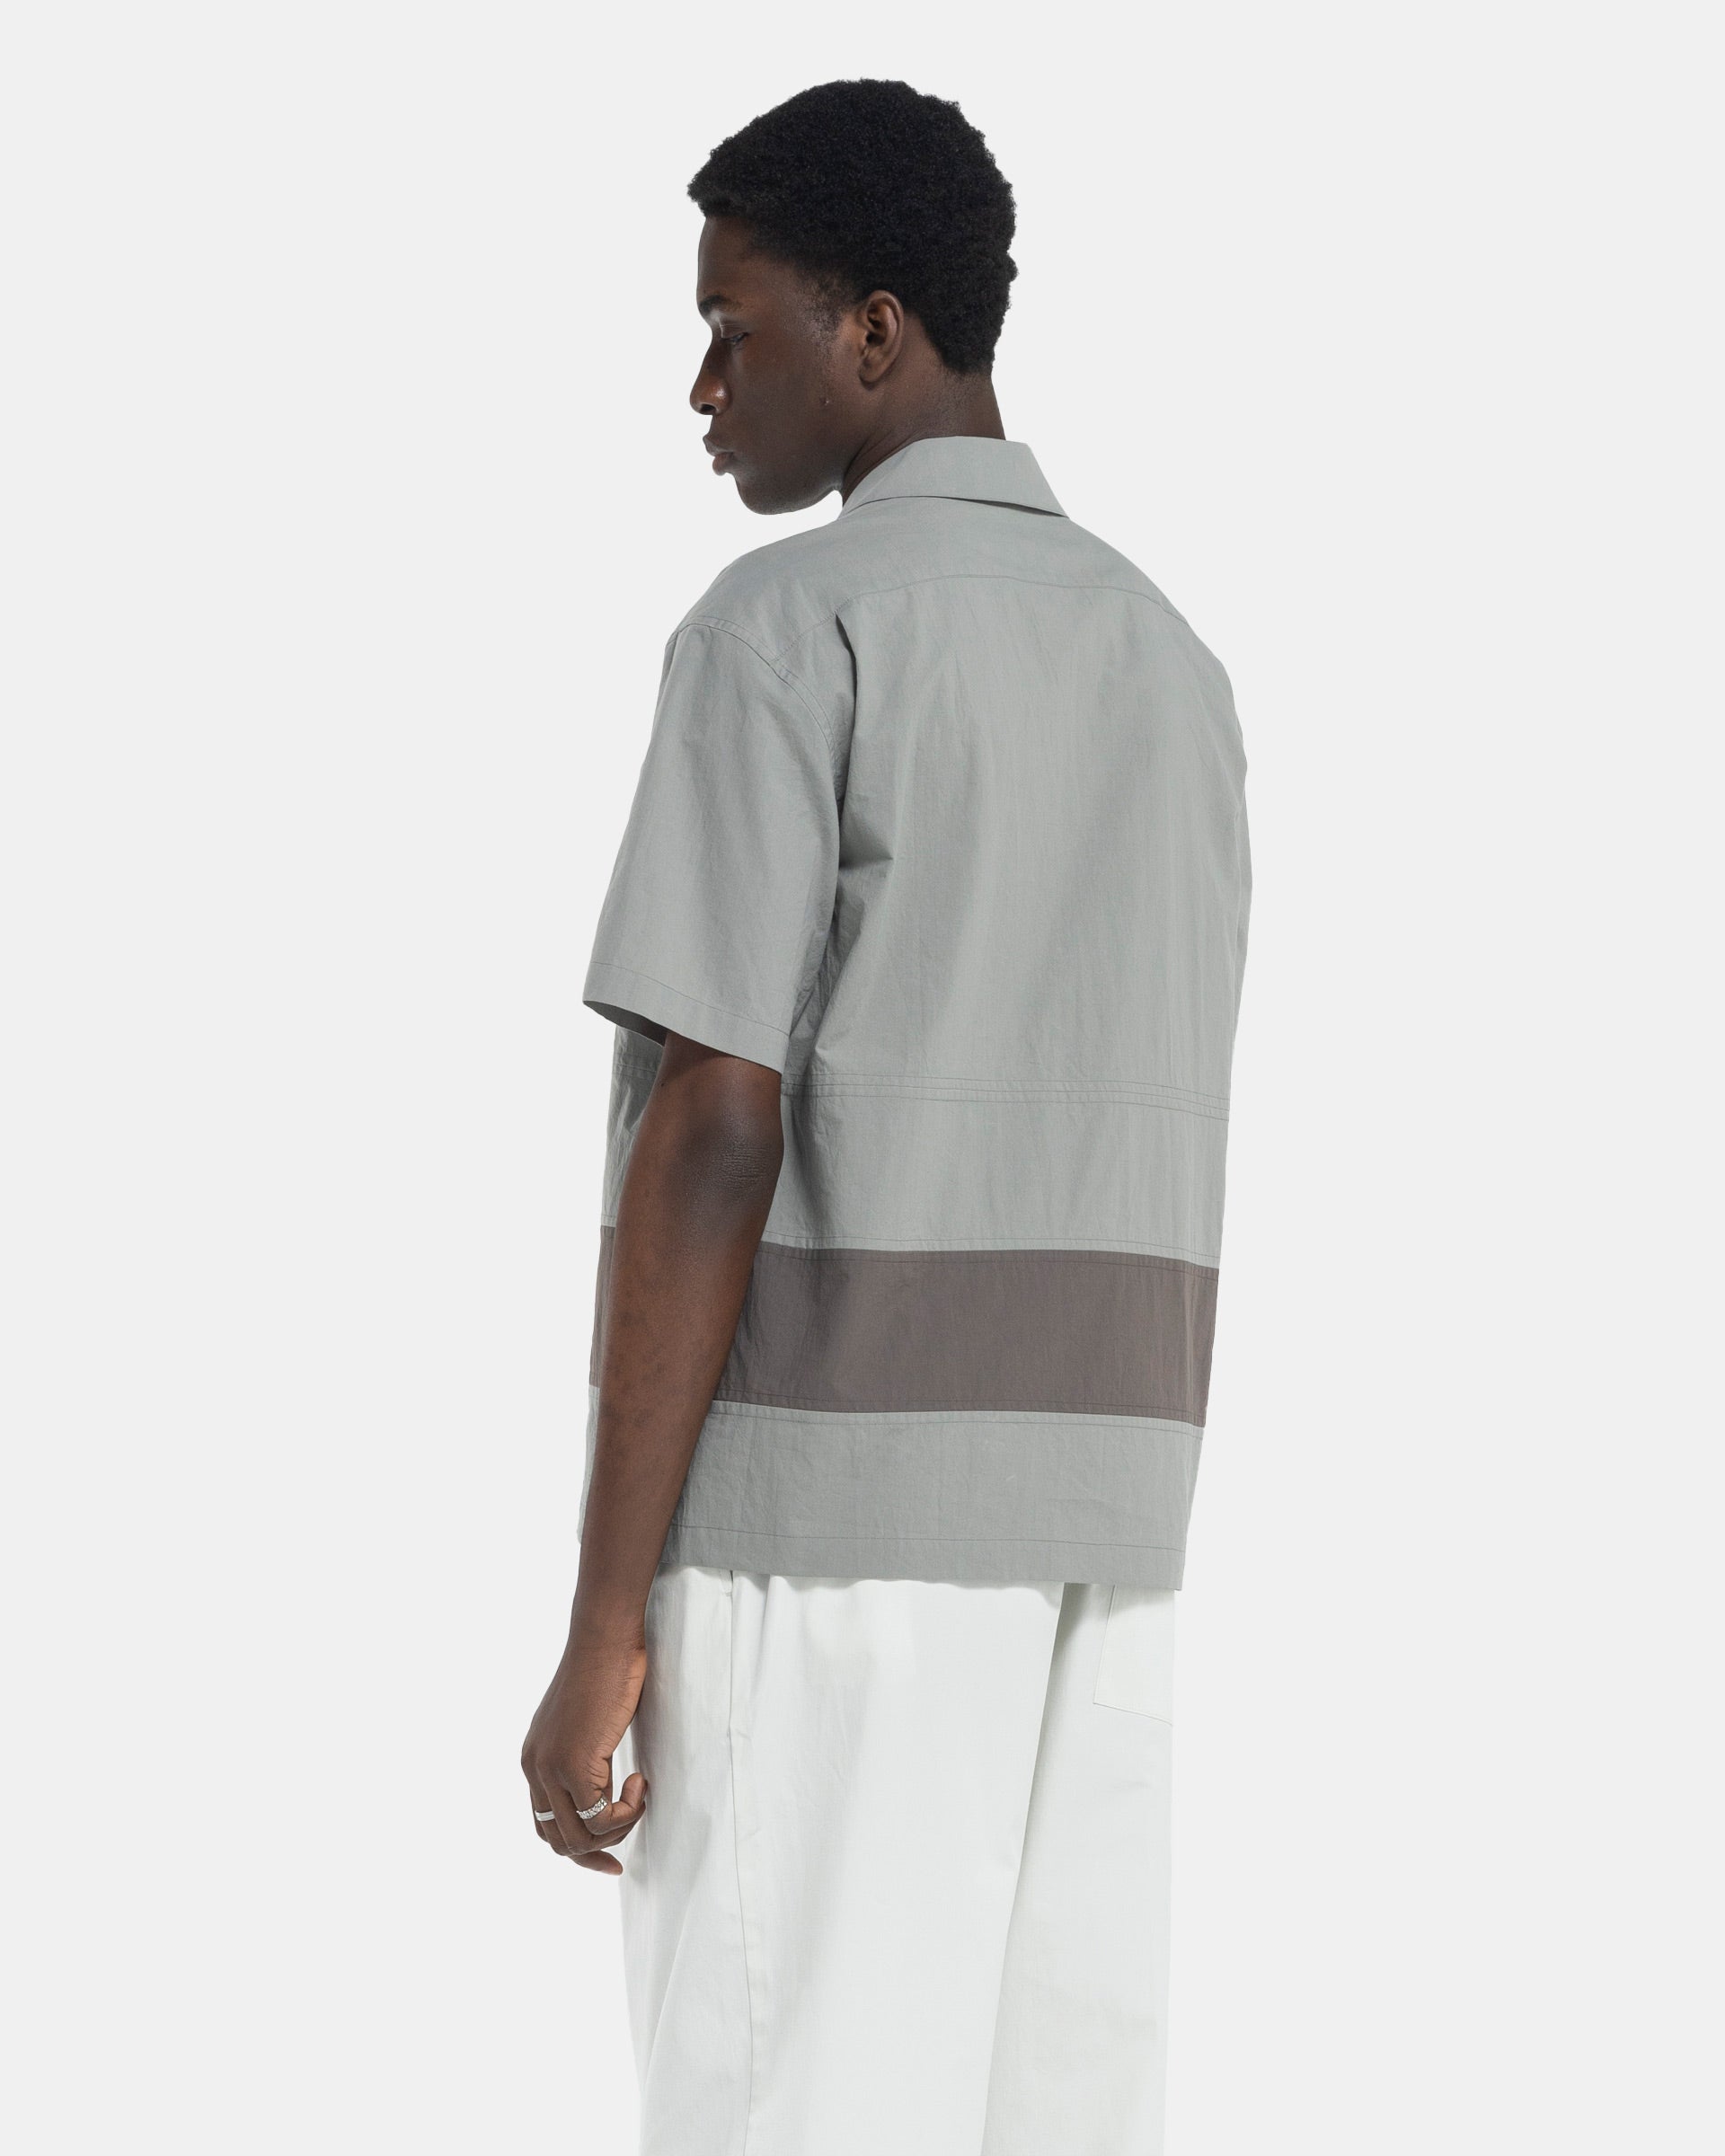 Model wearing Craig Green Barrel Shirt in Grey on white background